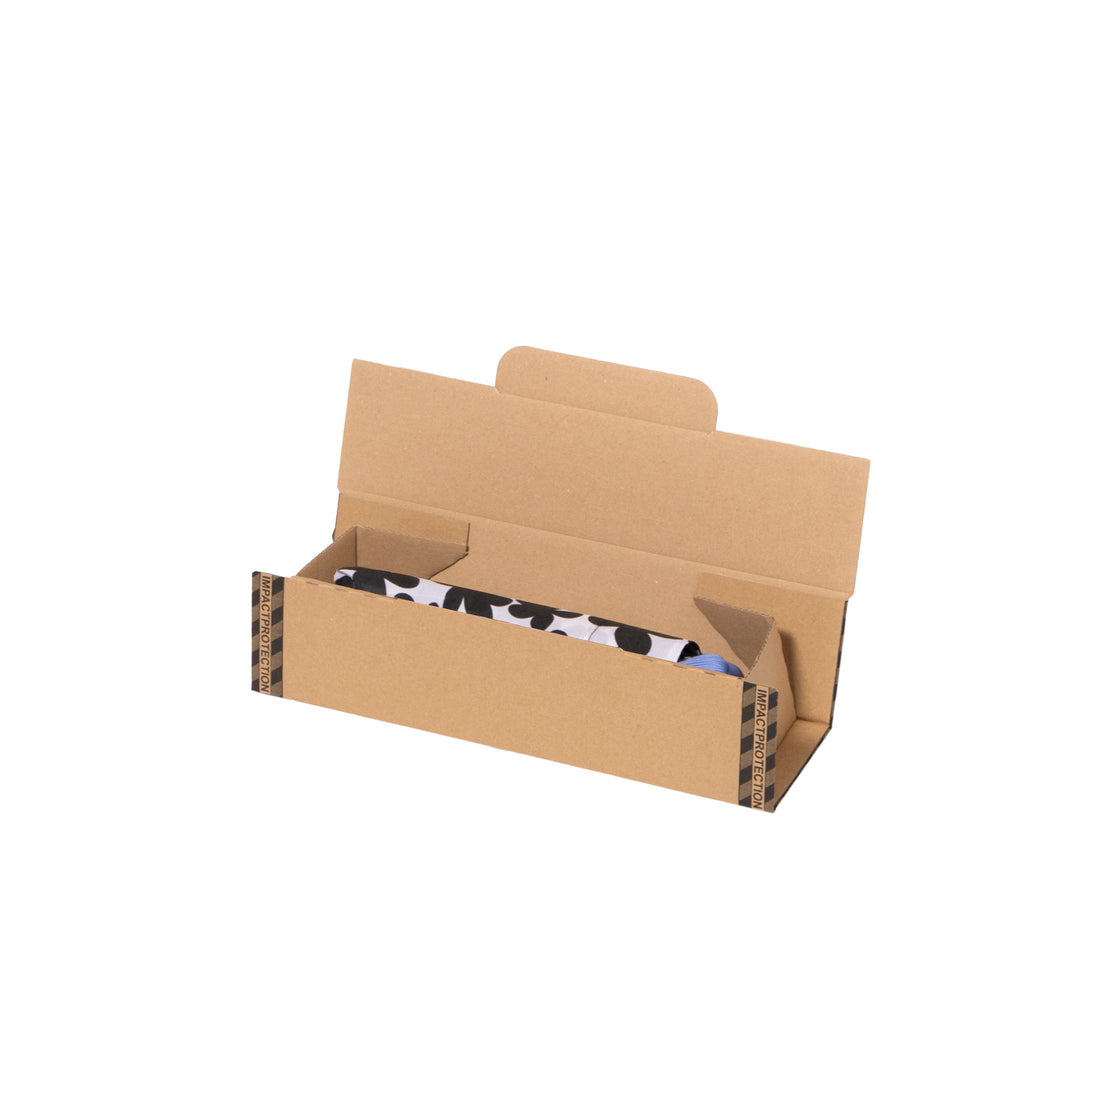 A3/4 Cardboard Postal Tube Plastic Free